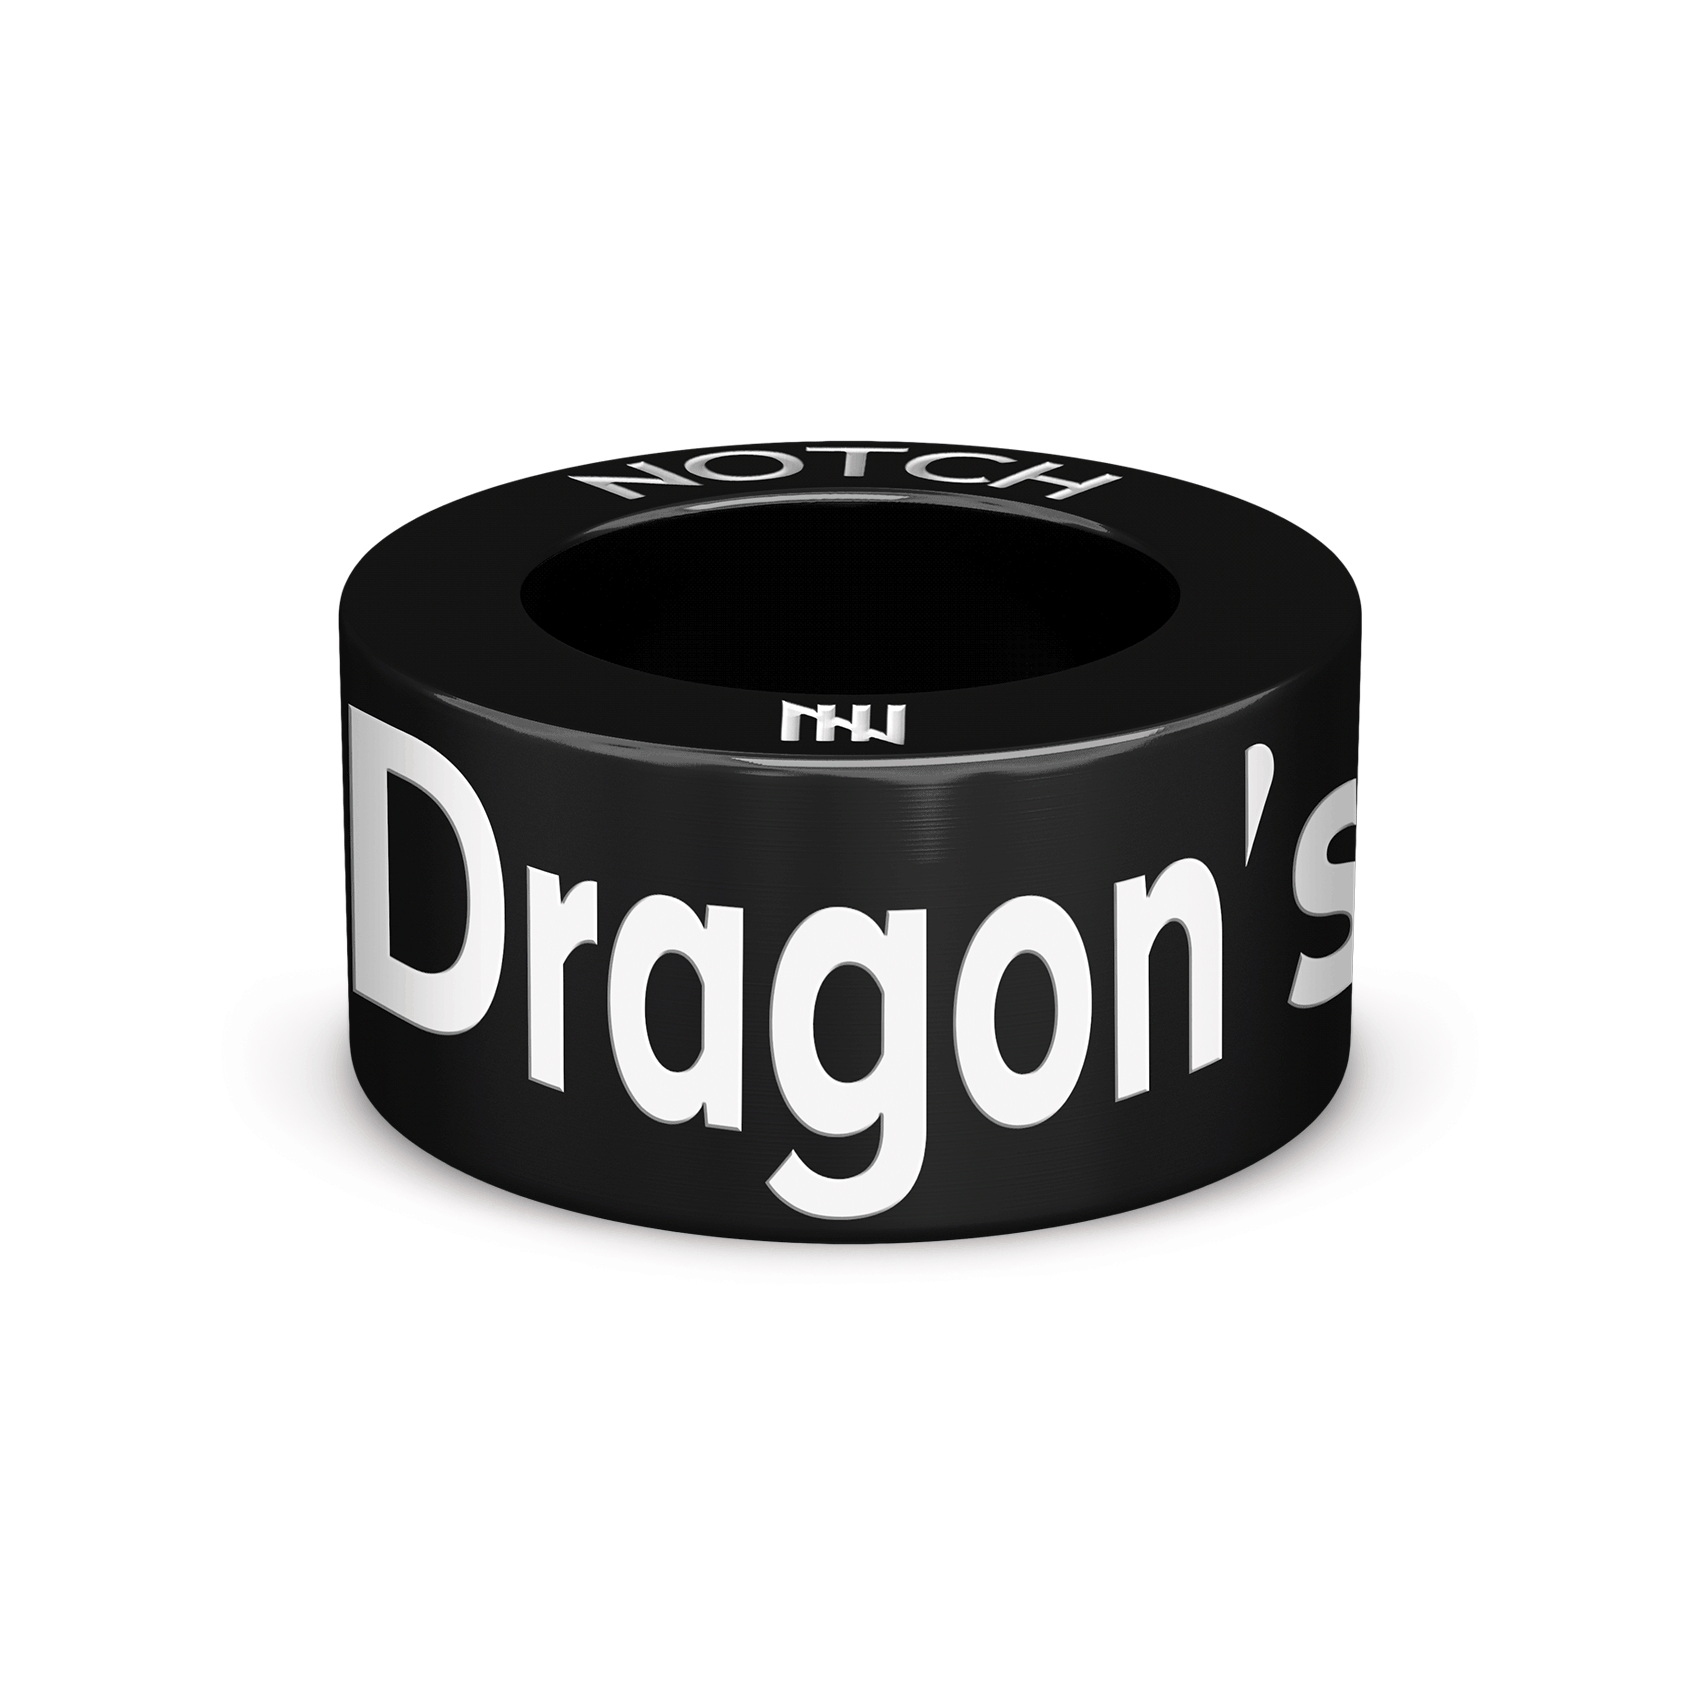 Dragonback - TRL Ring Size Guide